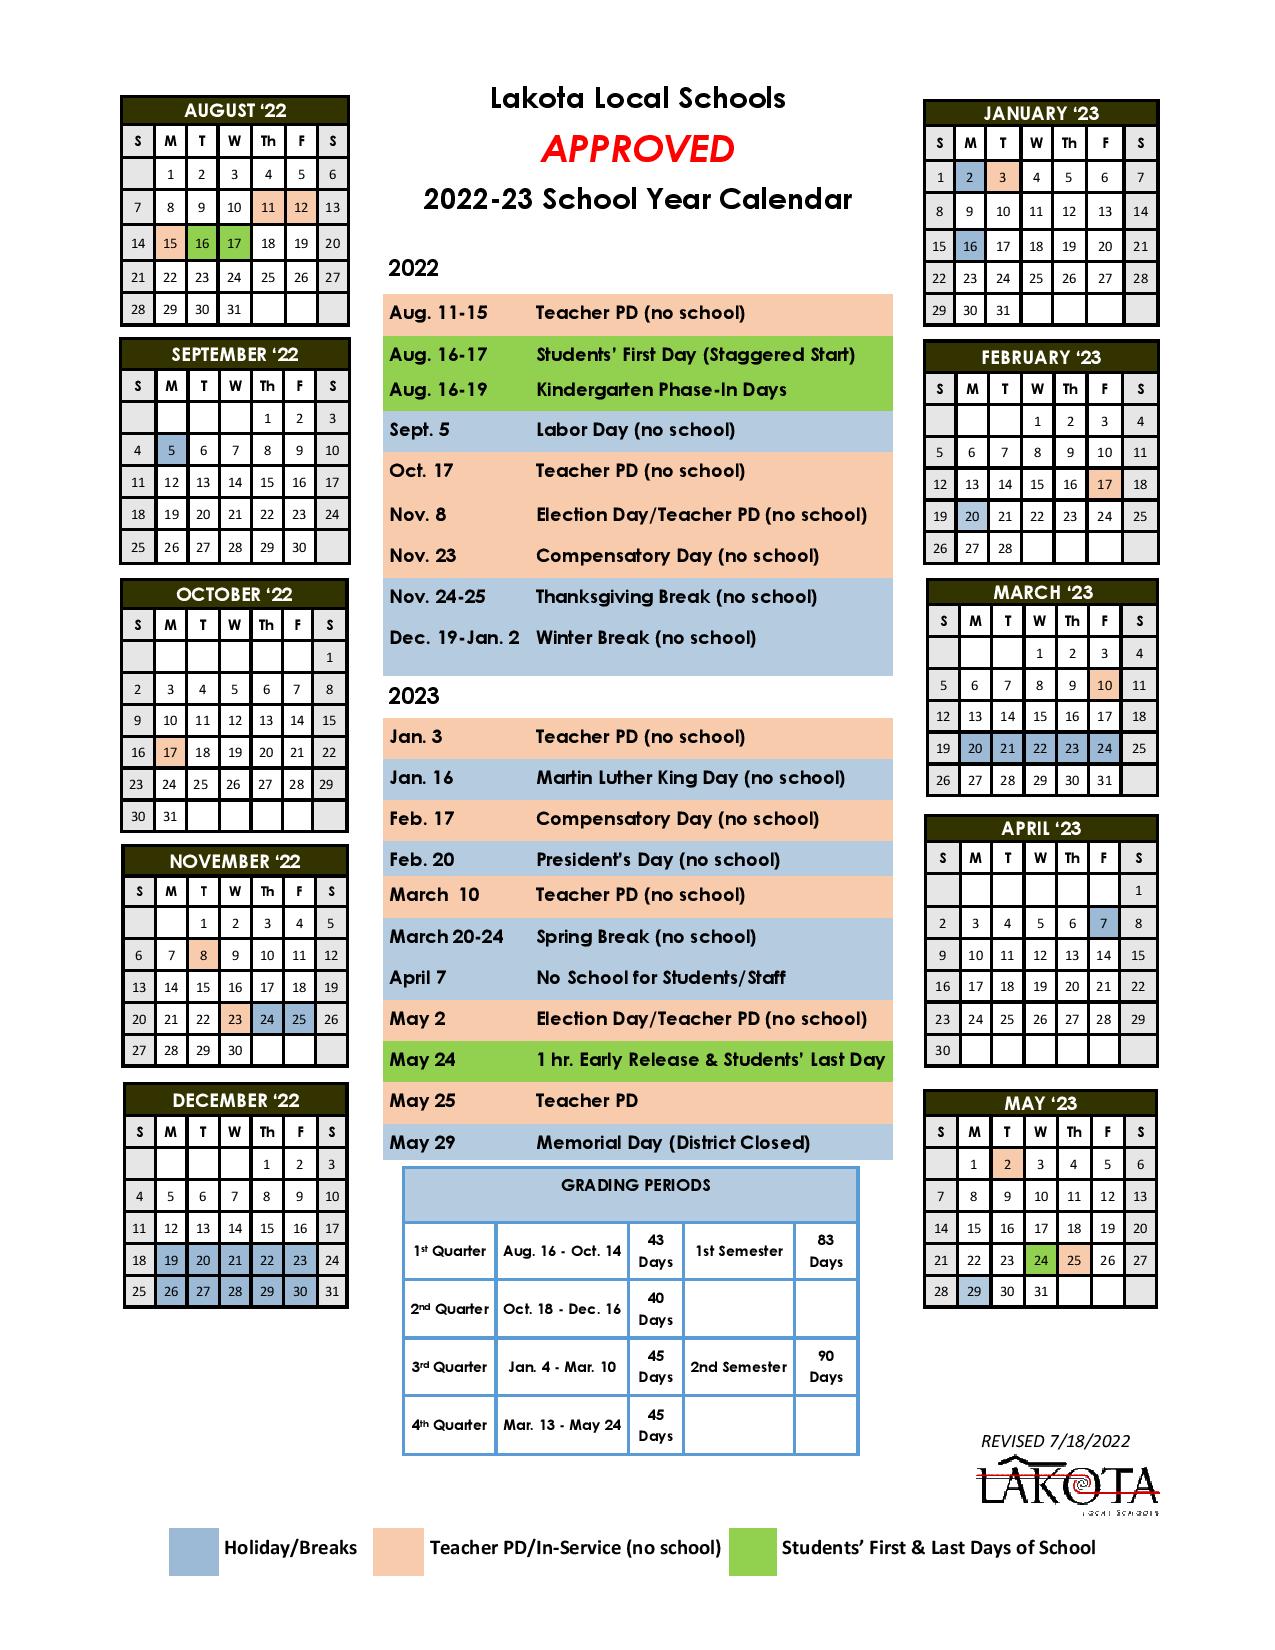 Lakota Local Schools Calendar 2022 2023 in PDF